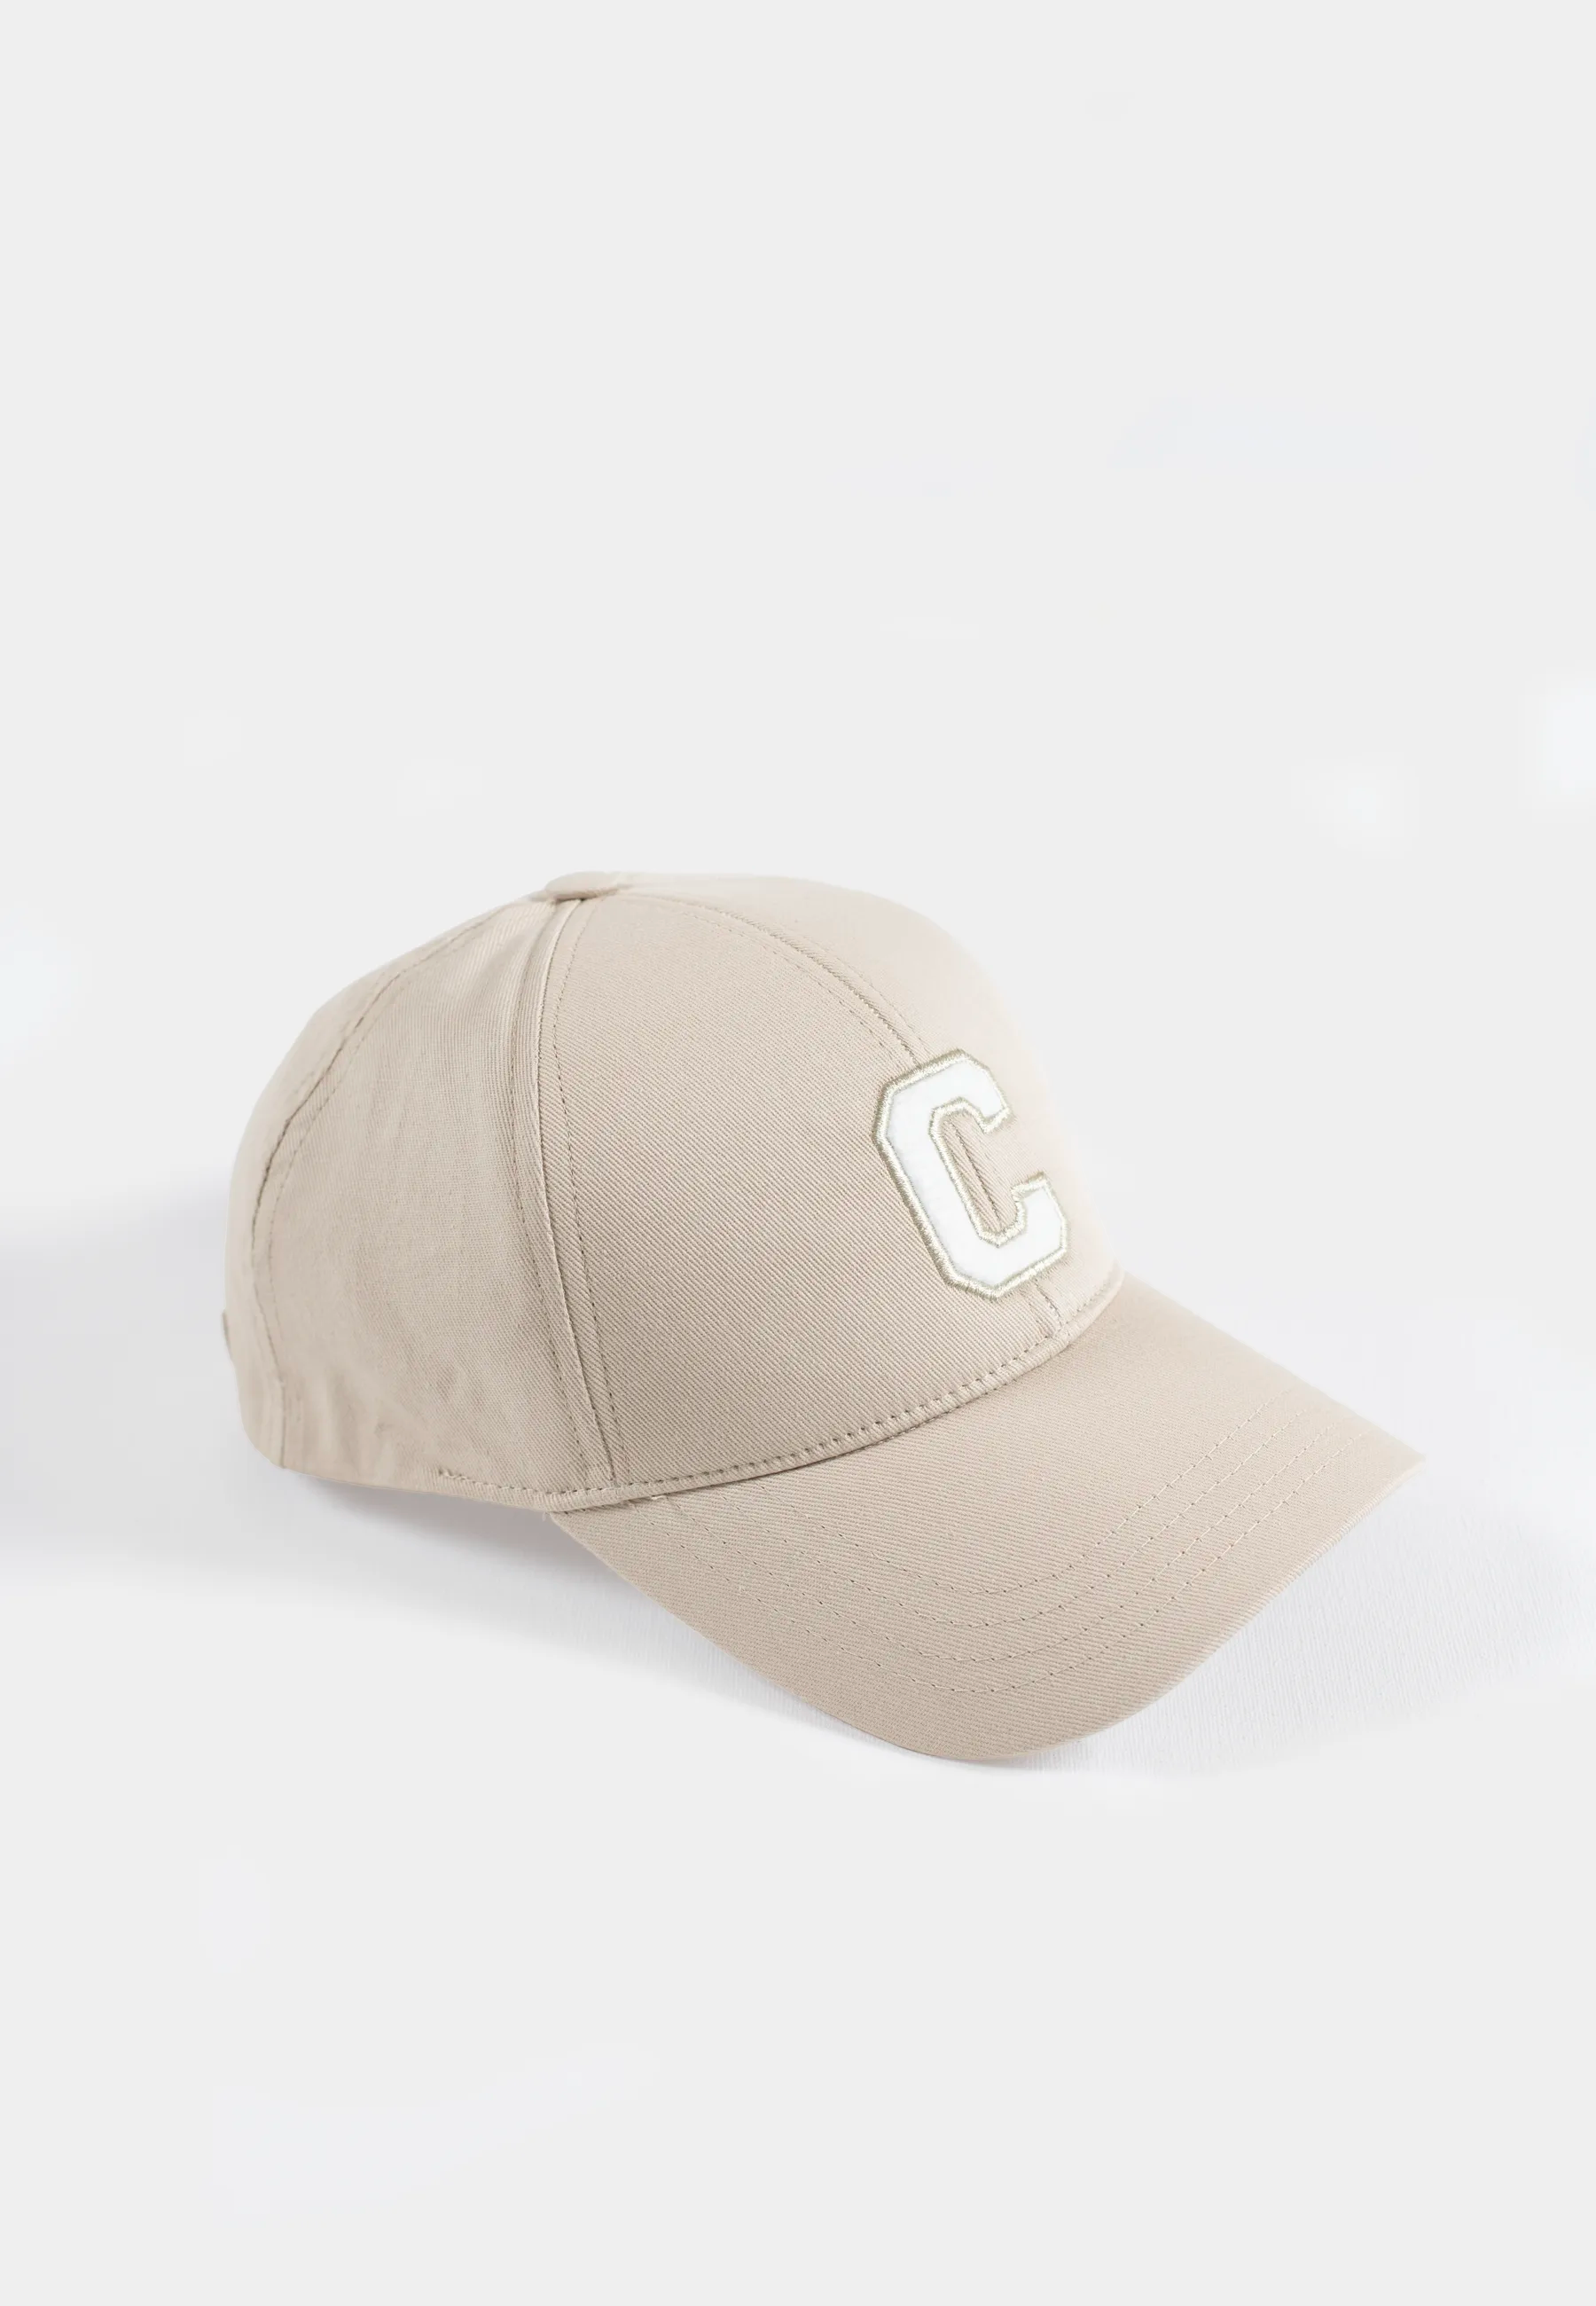 Bryce C baseball cap - Beige